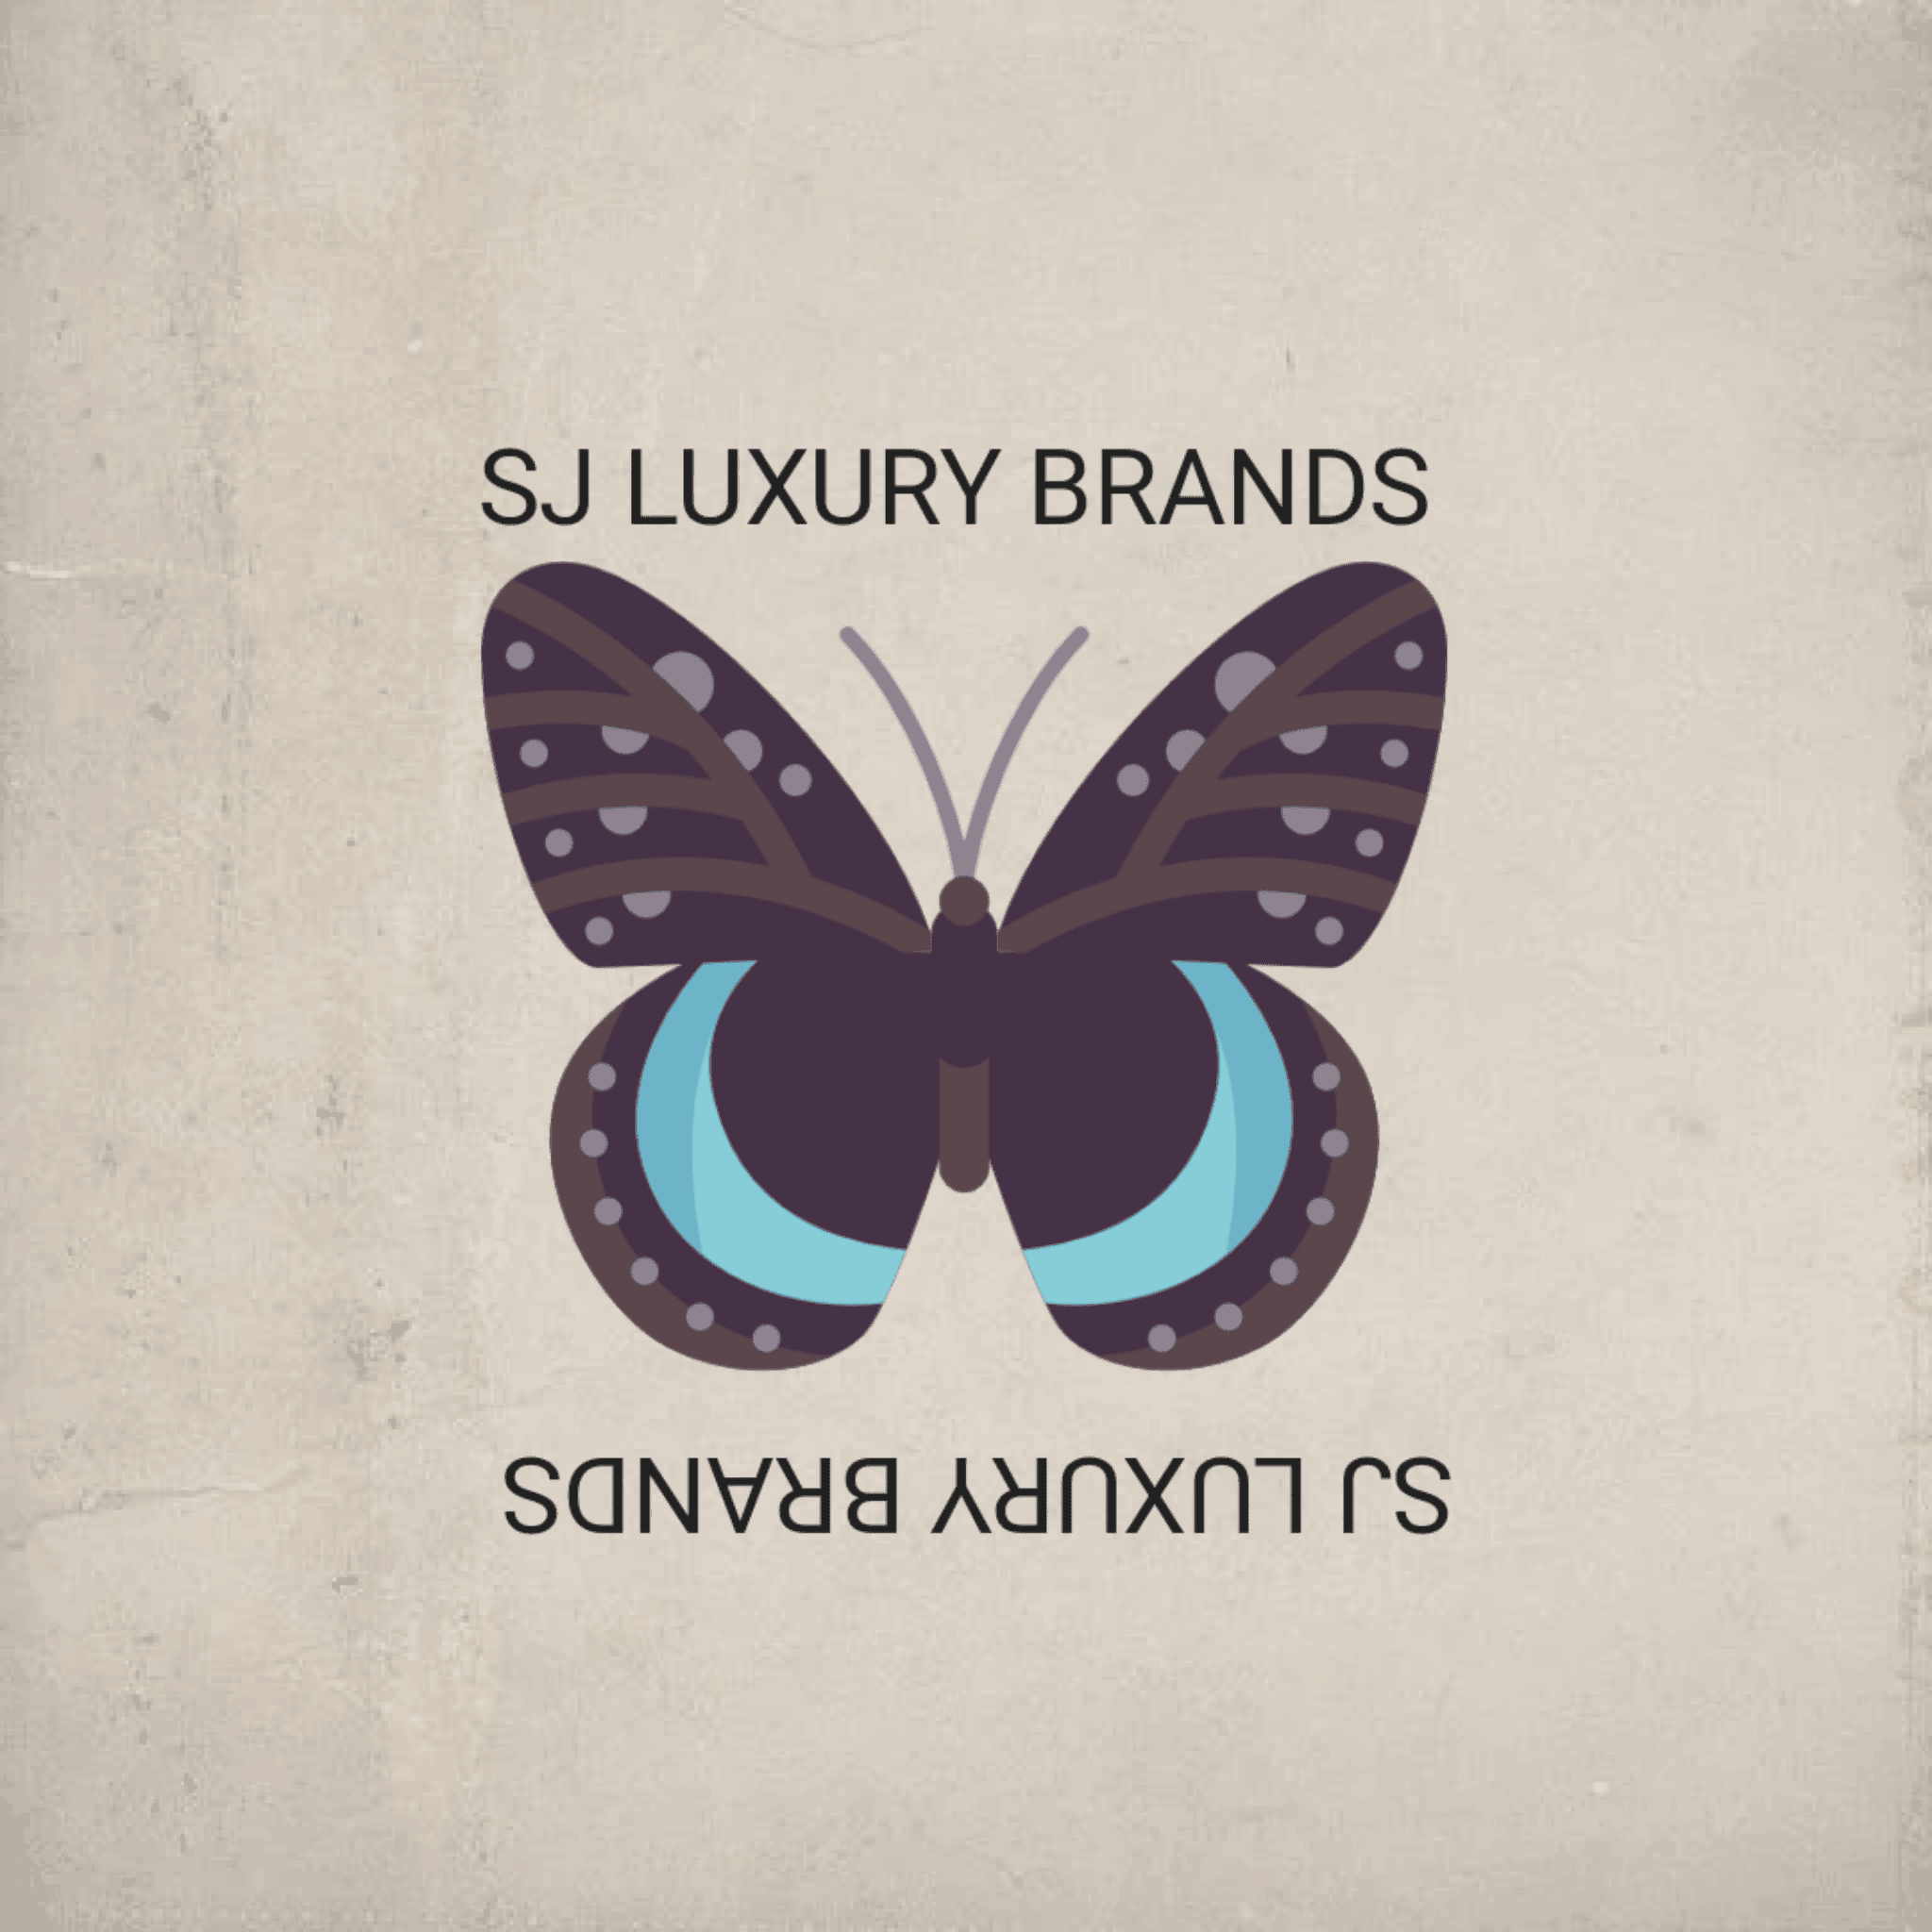 Sj Luxury Brands